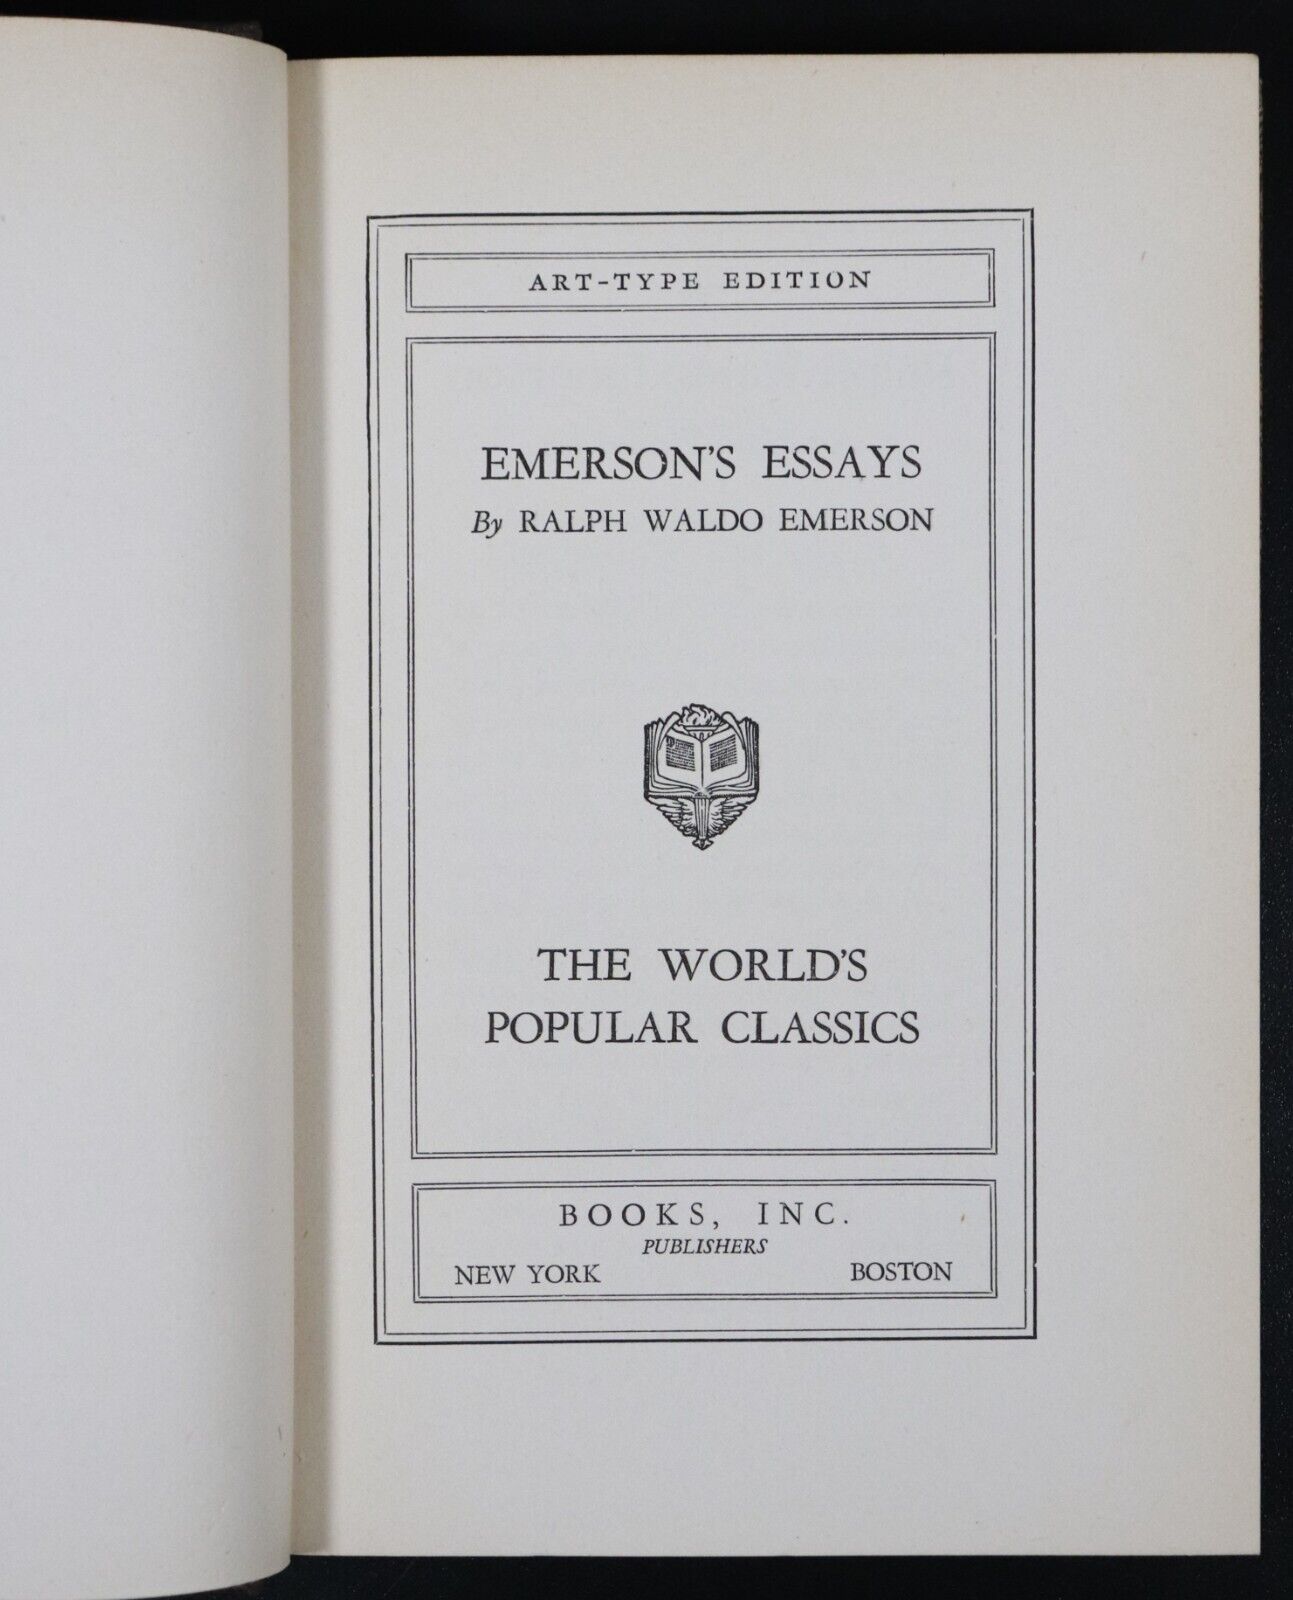 c1950 Emerson's Essays R.W. Emerson - Art Type Edition - Vintage Philosophy Book - 0